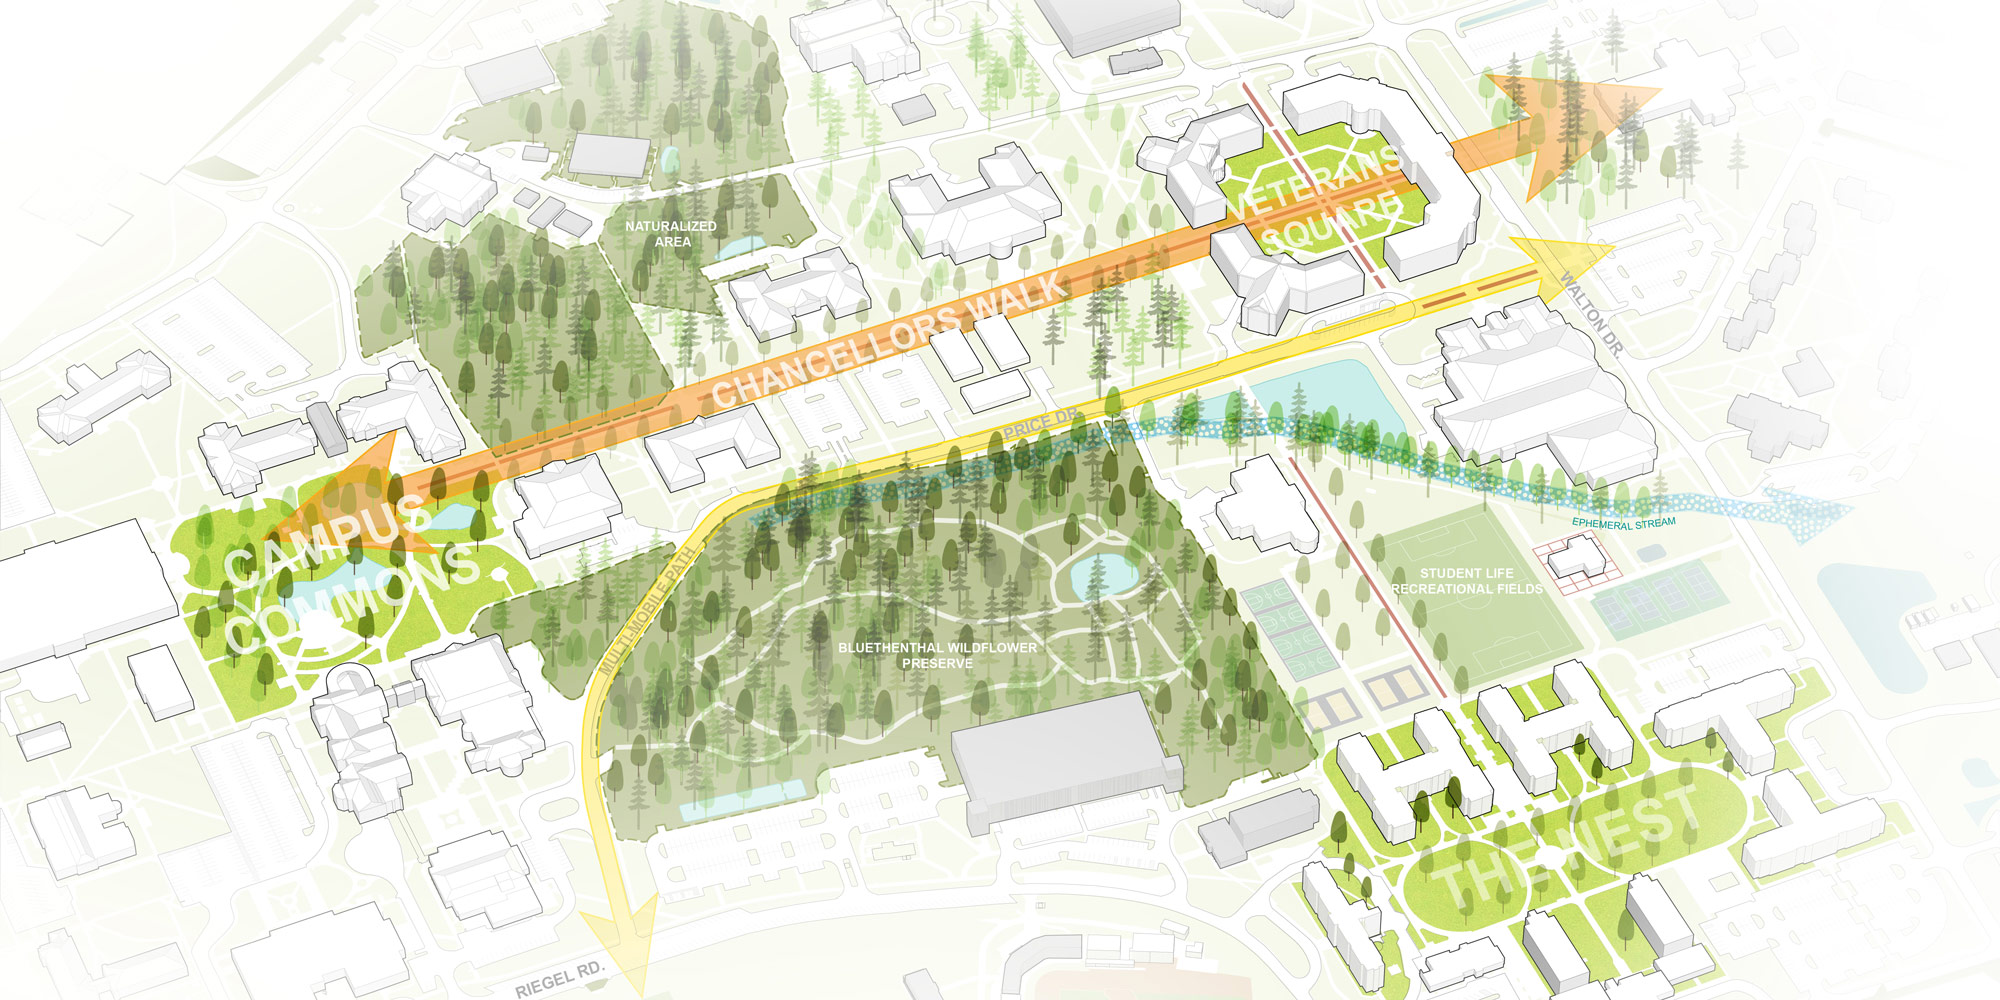 UNCW Campus Master Plan rendering